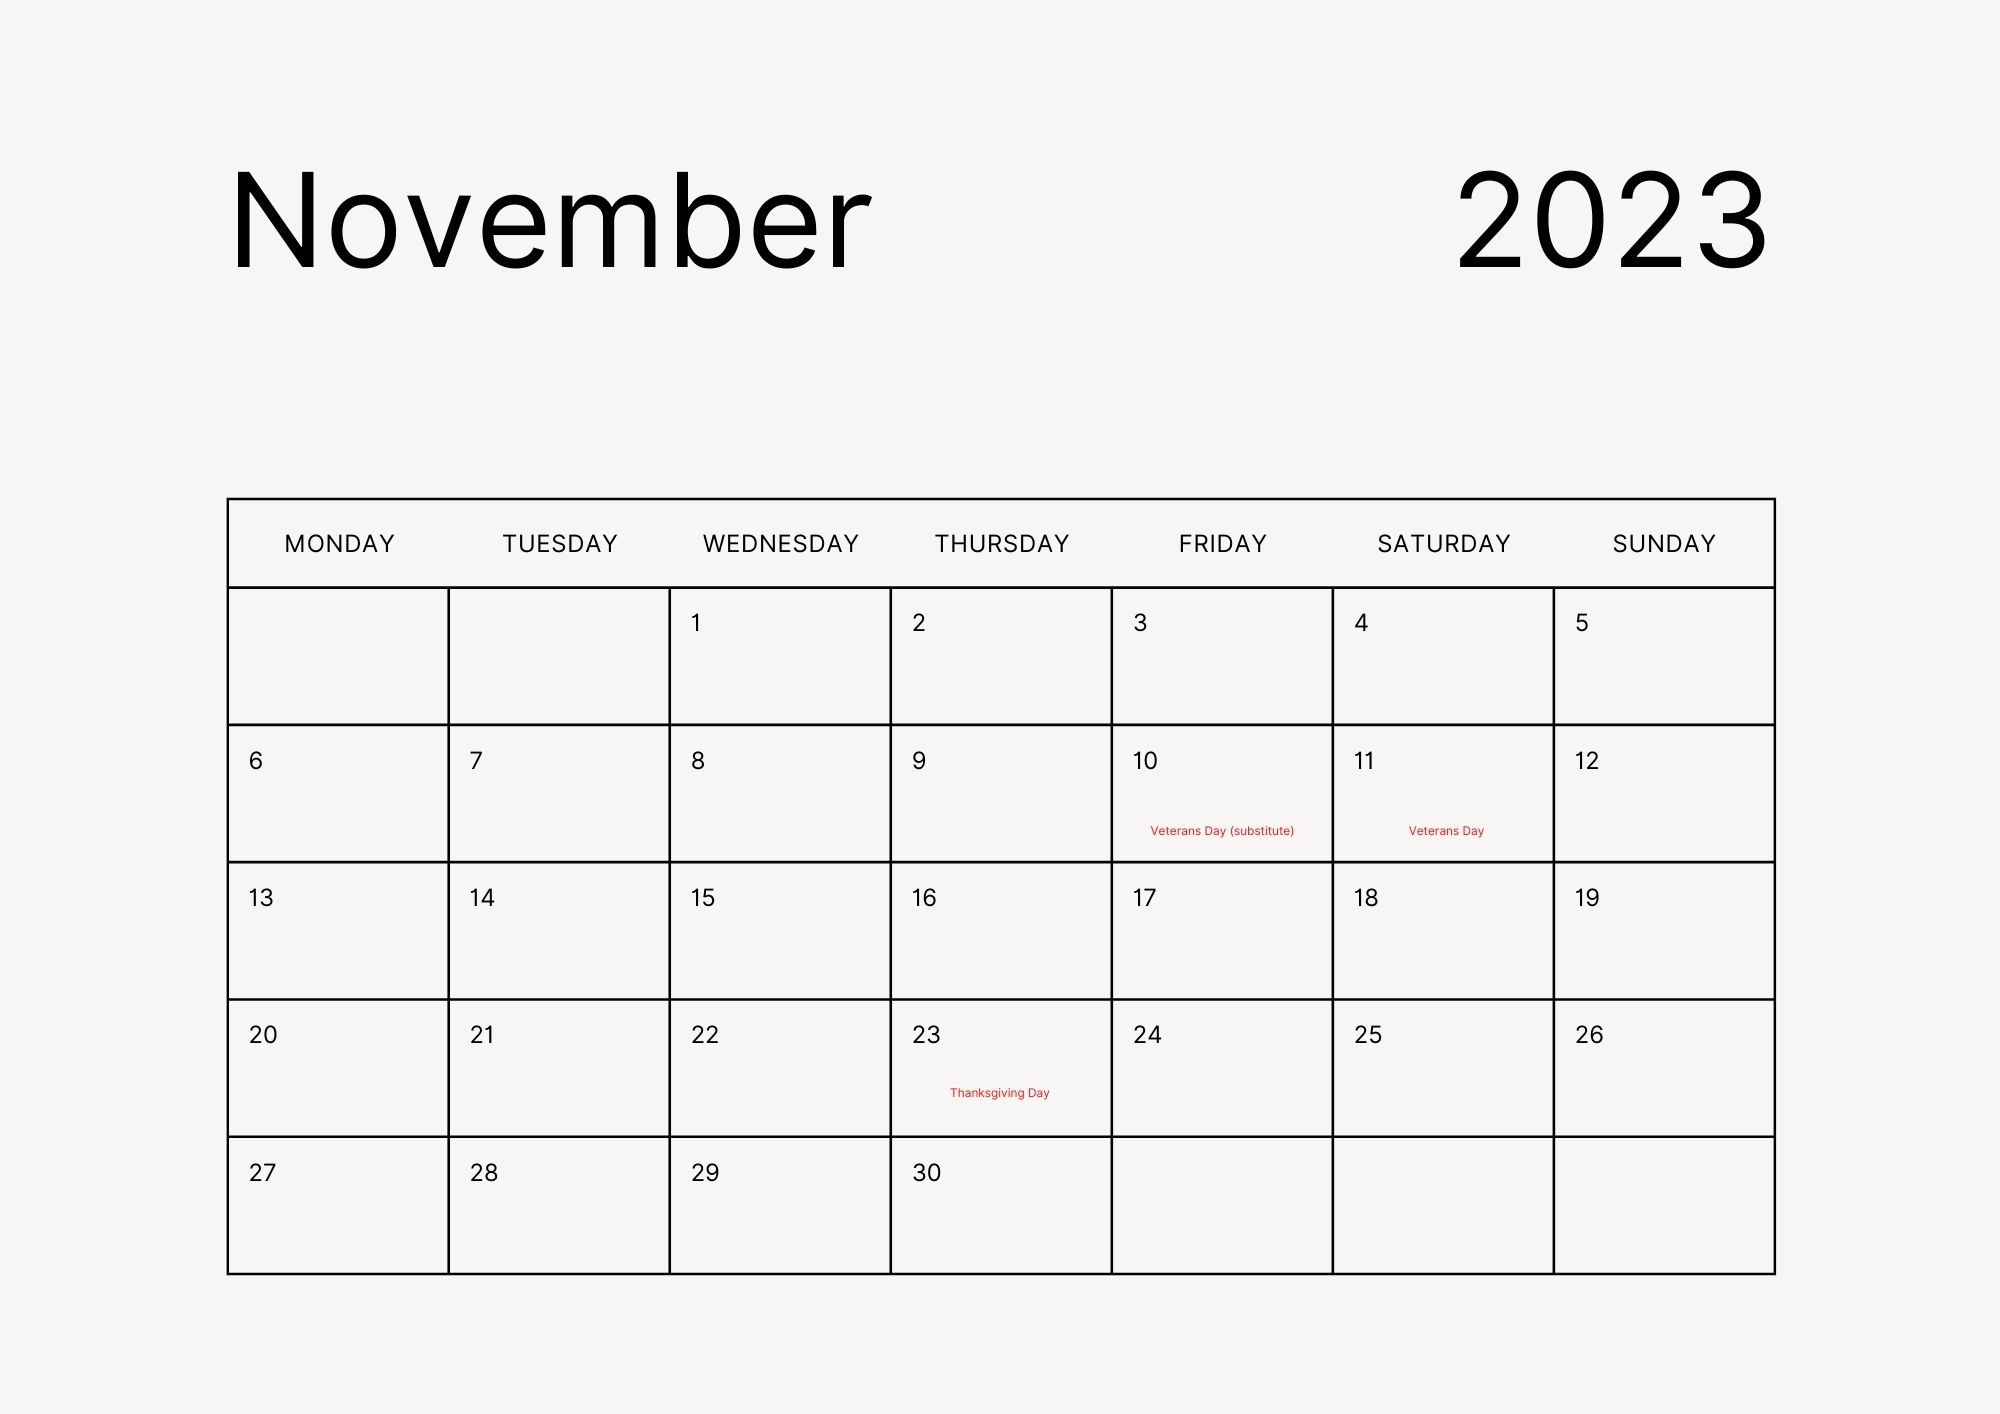 November Holidays 2023